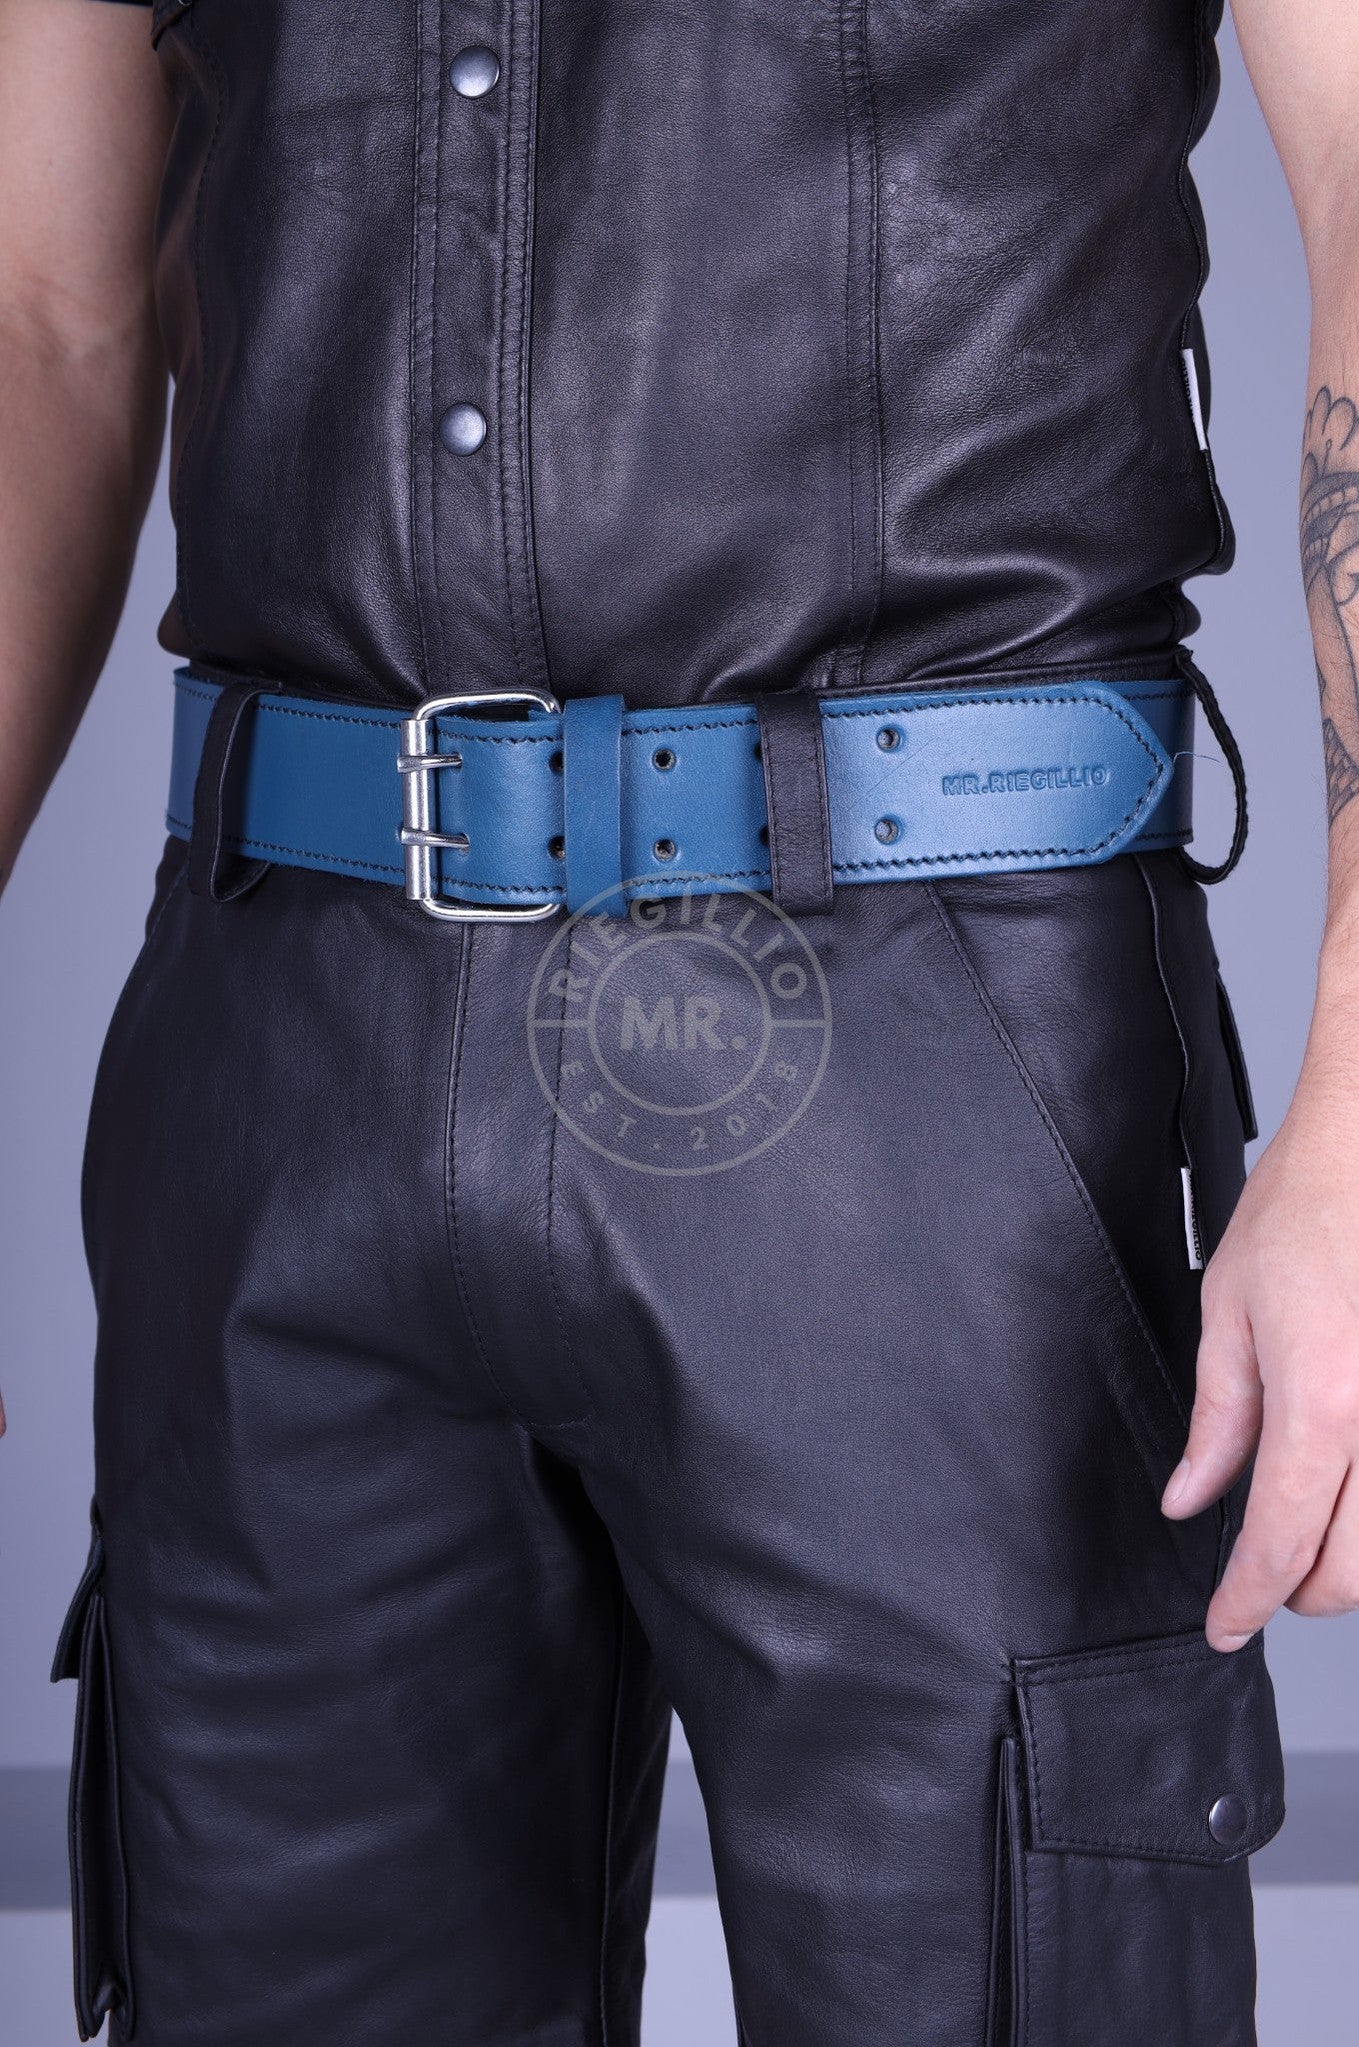 Jeans Blue Leather Belt-at MR. Riegillio